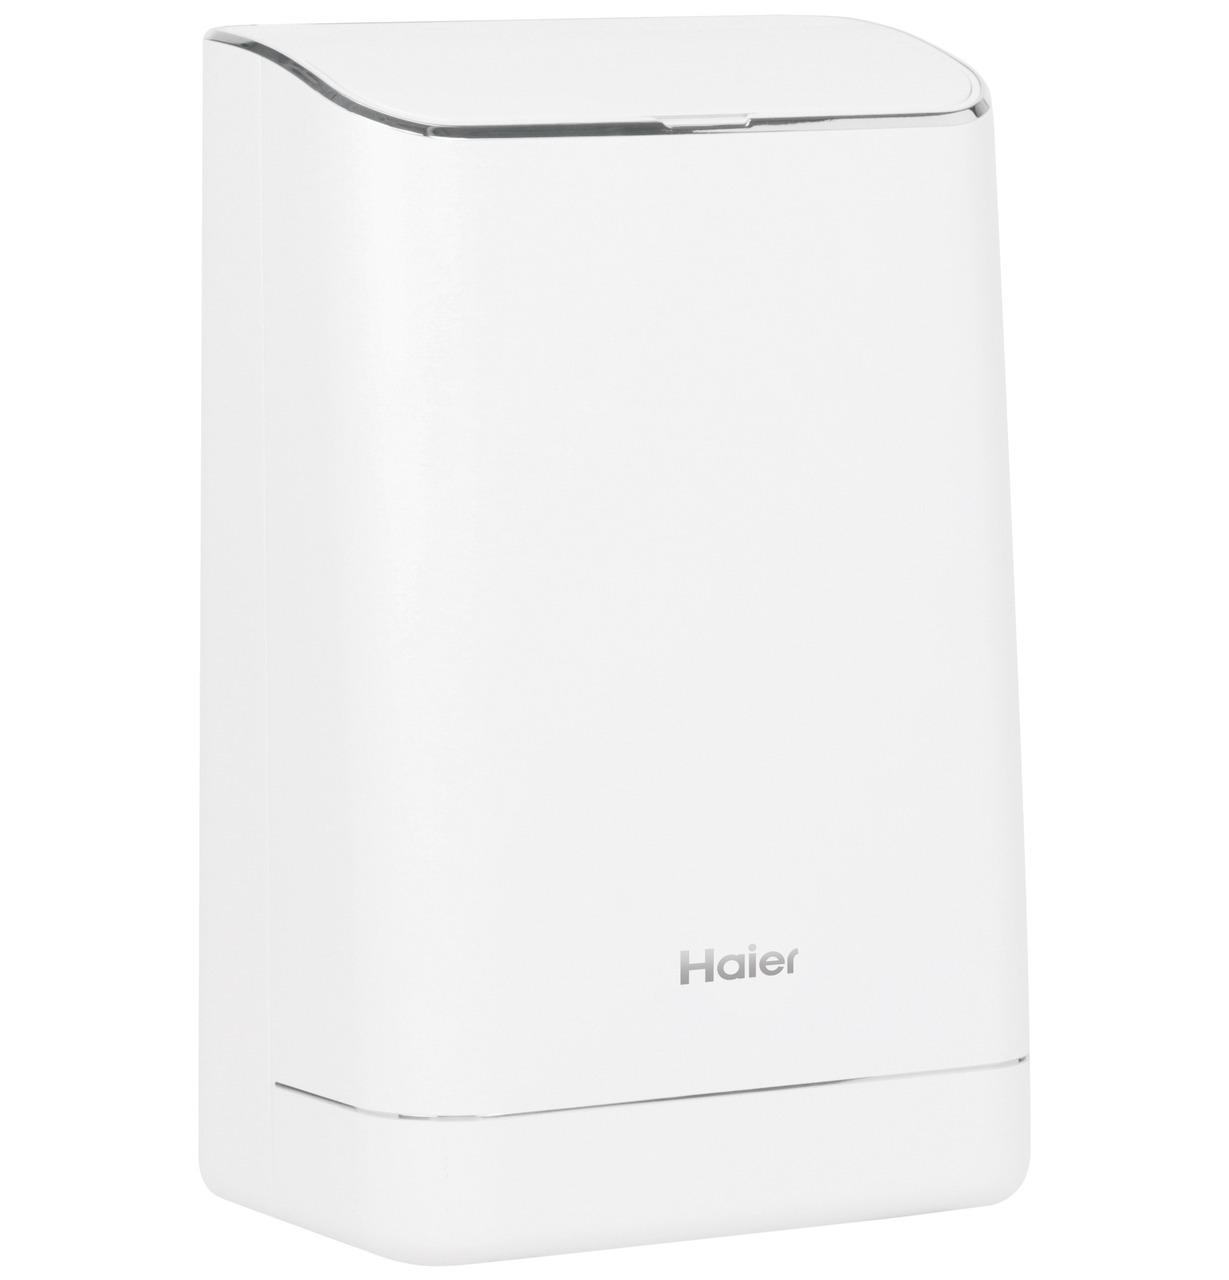 Haier® Portable Air Conditioner with Dehumidifier for Medium Rooms up to 450 sq. ft., 12,000 BTU (8,200 BTU SACC)